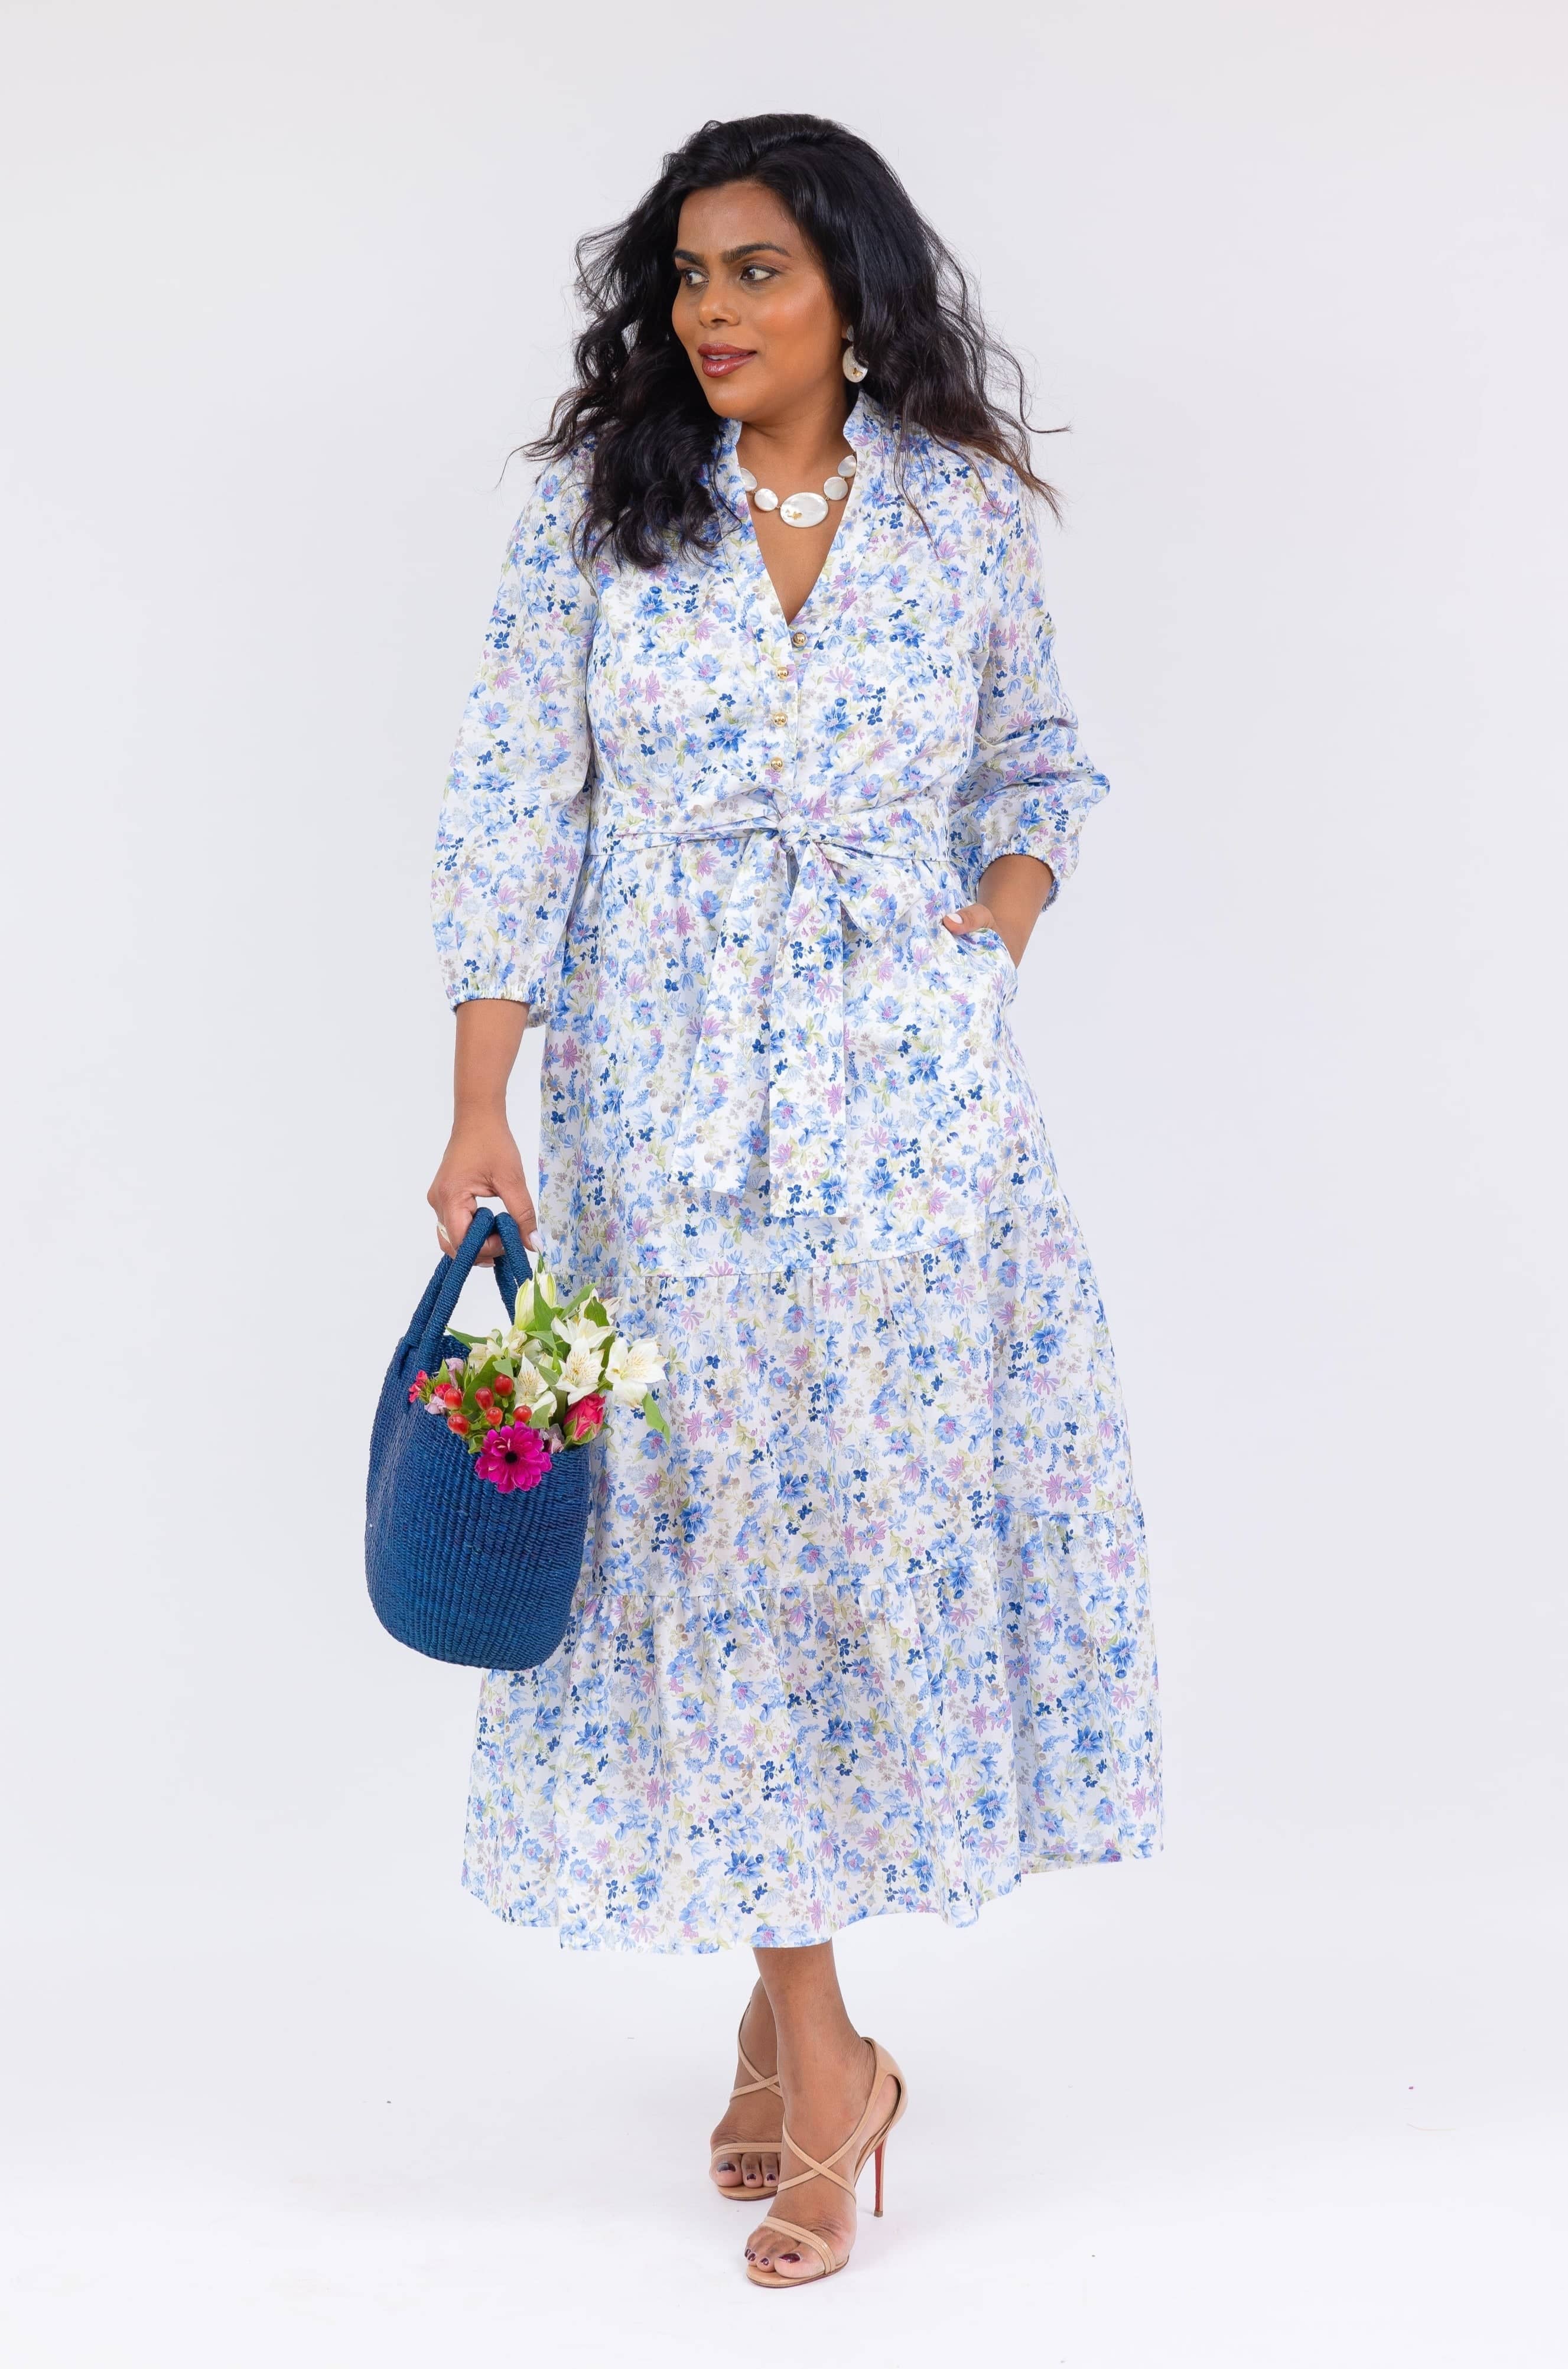 belted maxi dress in blue floral - luxury women's dress